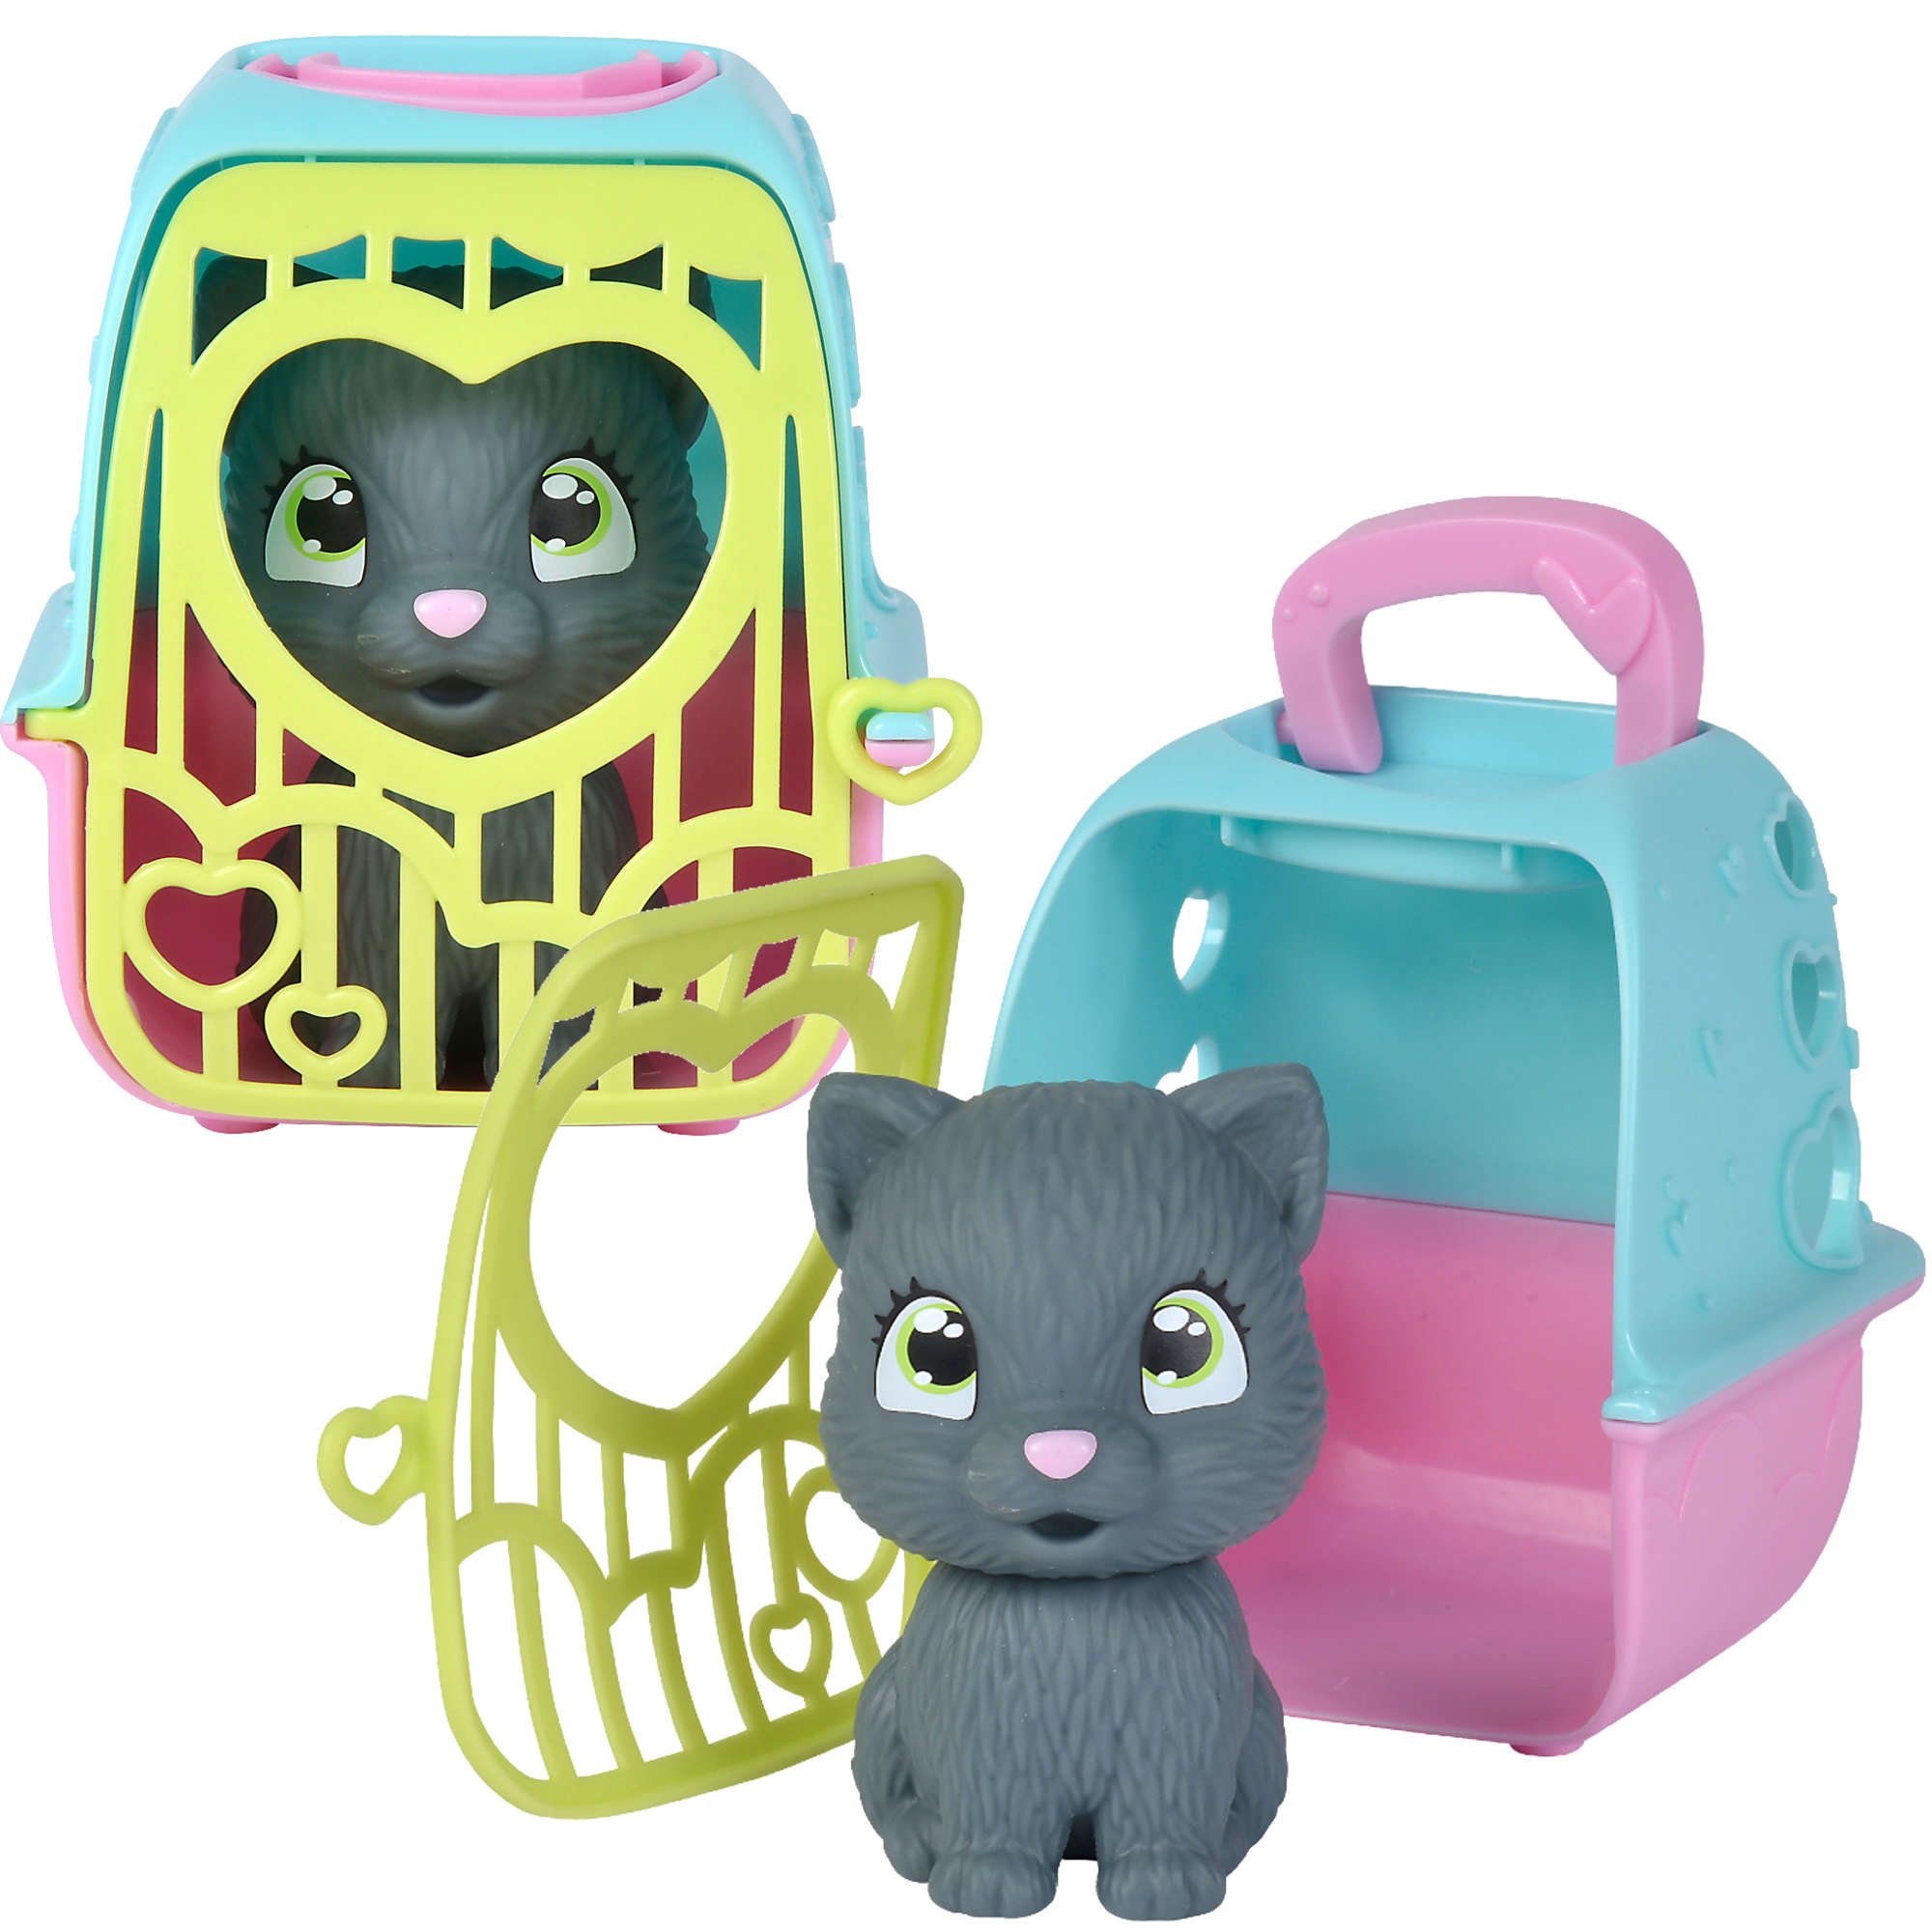 Pamper Petz Mini Kotek Figurka Ma³e Zwierz±tko z transporterem Simba